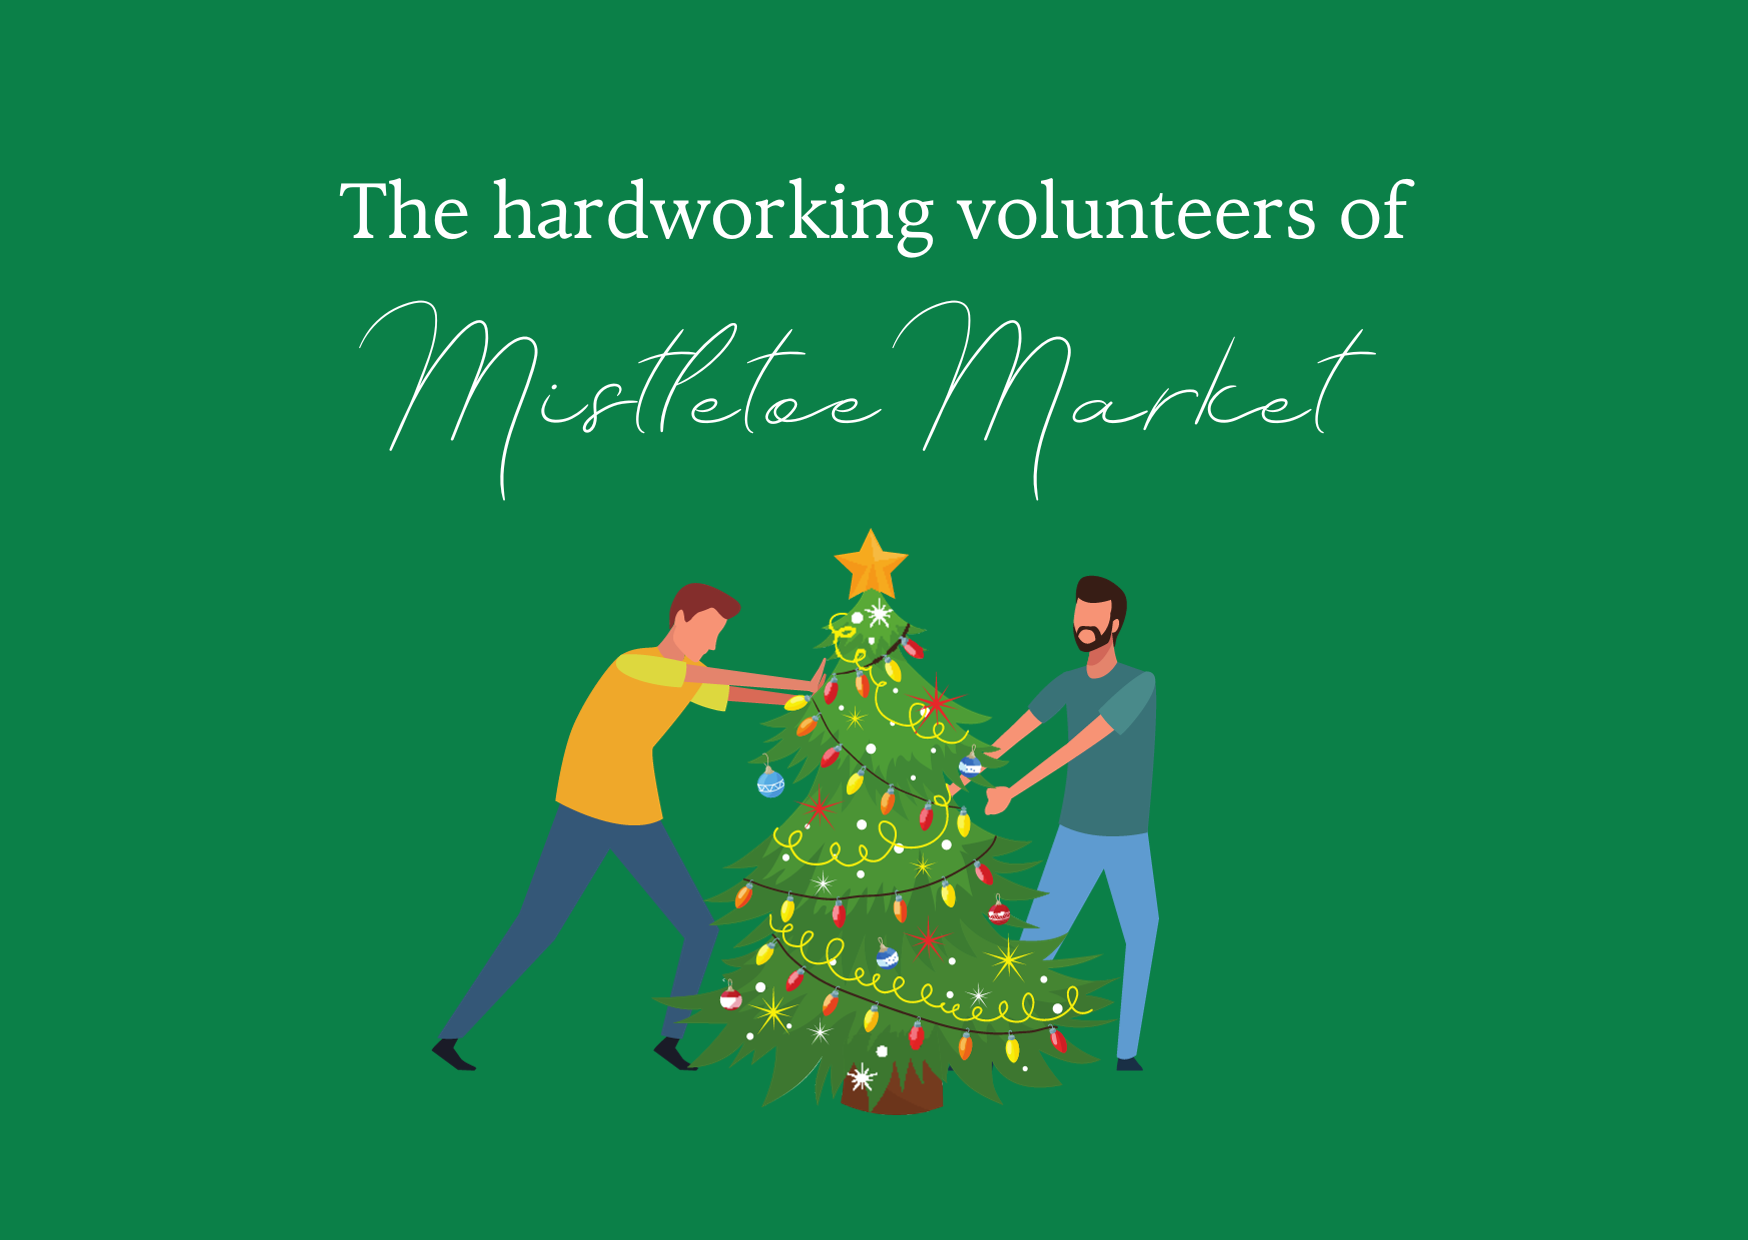 Mistletoe Market volunteers work tirelessly to bring holiday cheer to